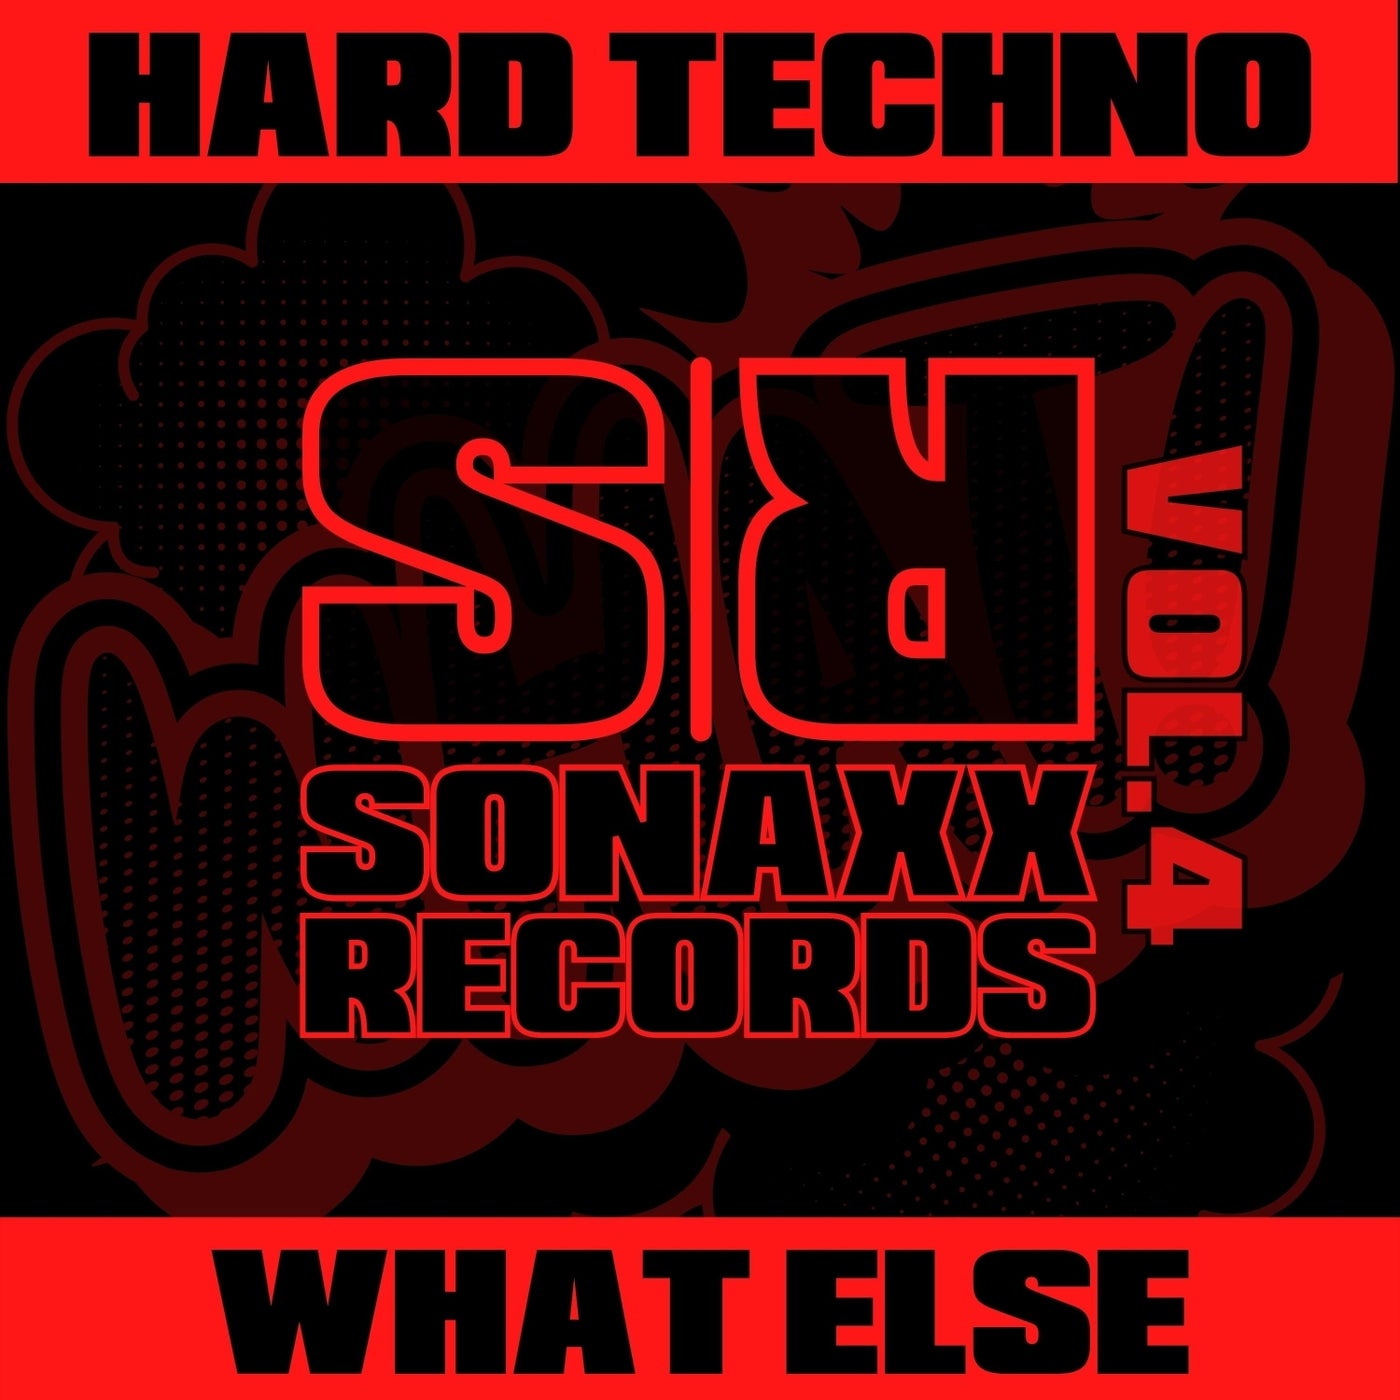 Hard Techno What Else, Vol. 4